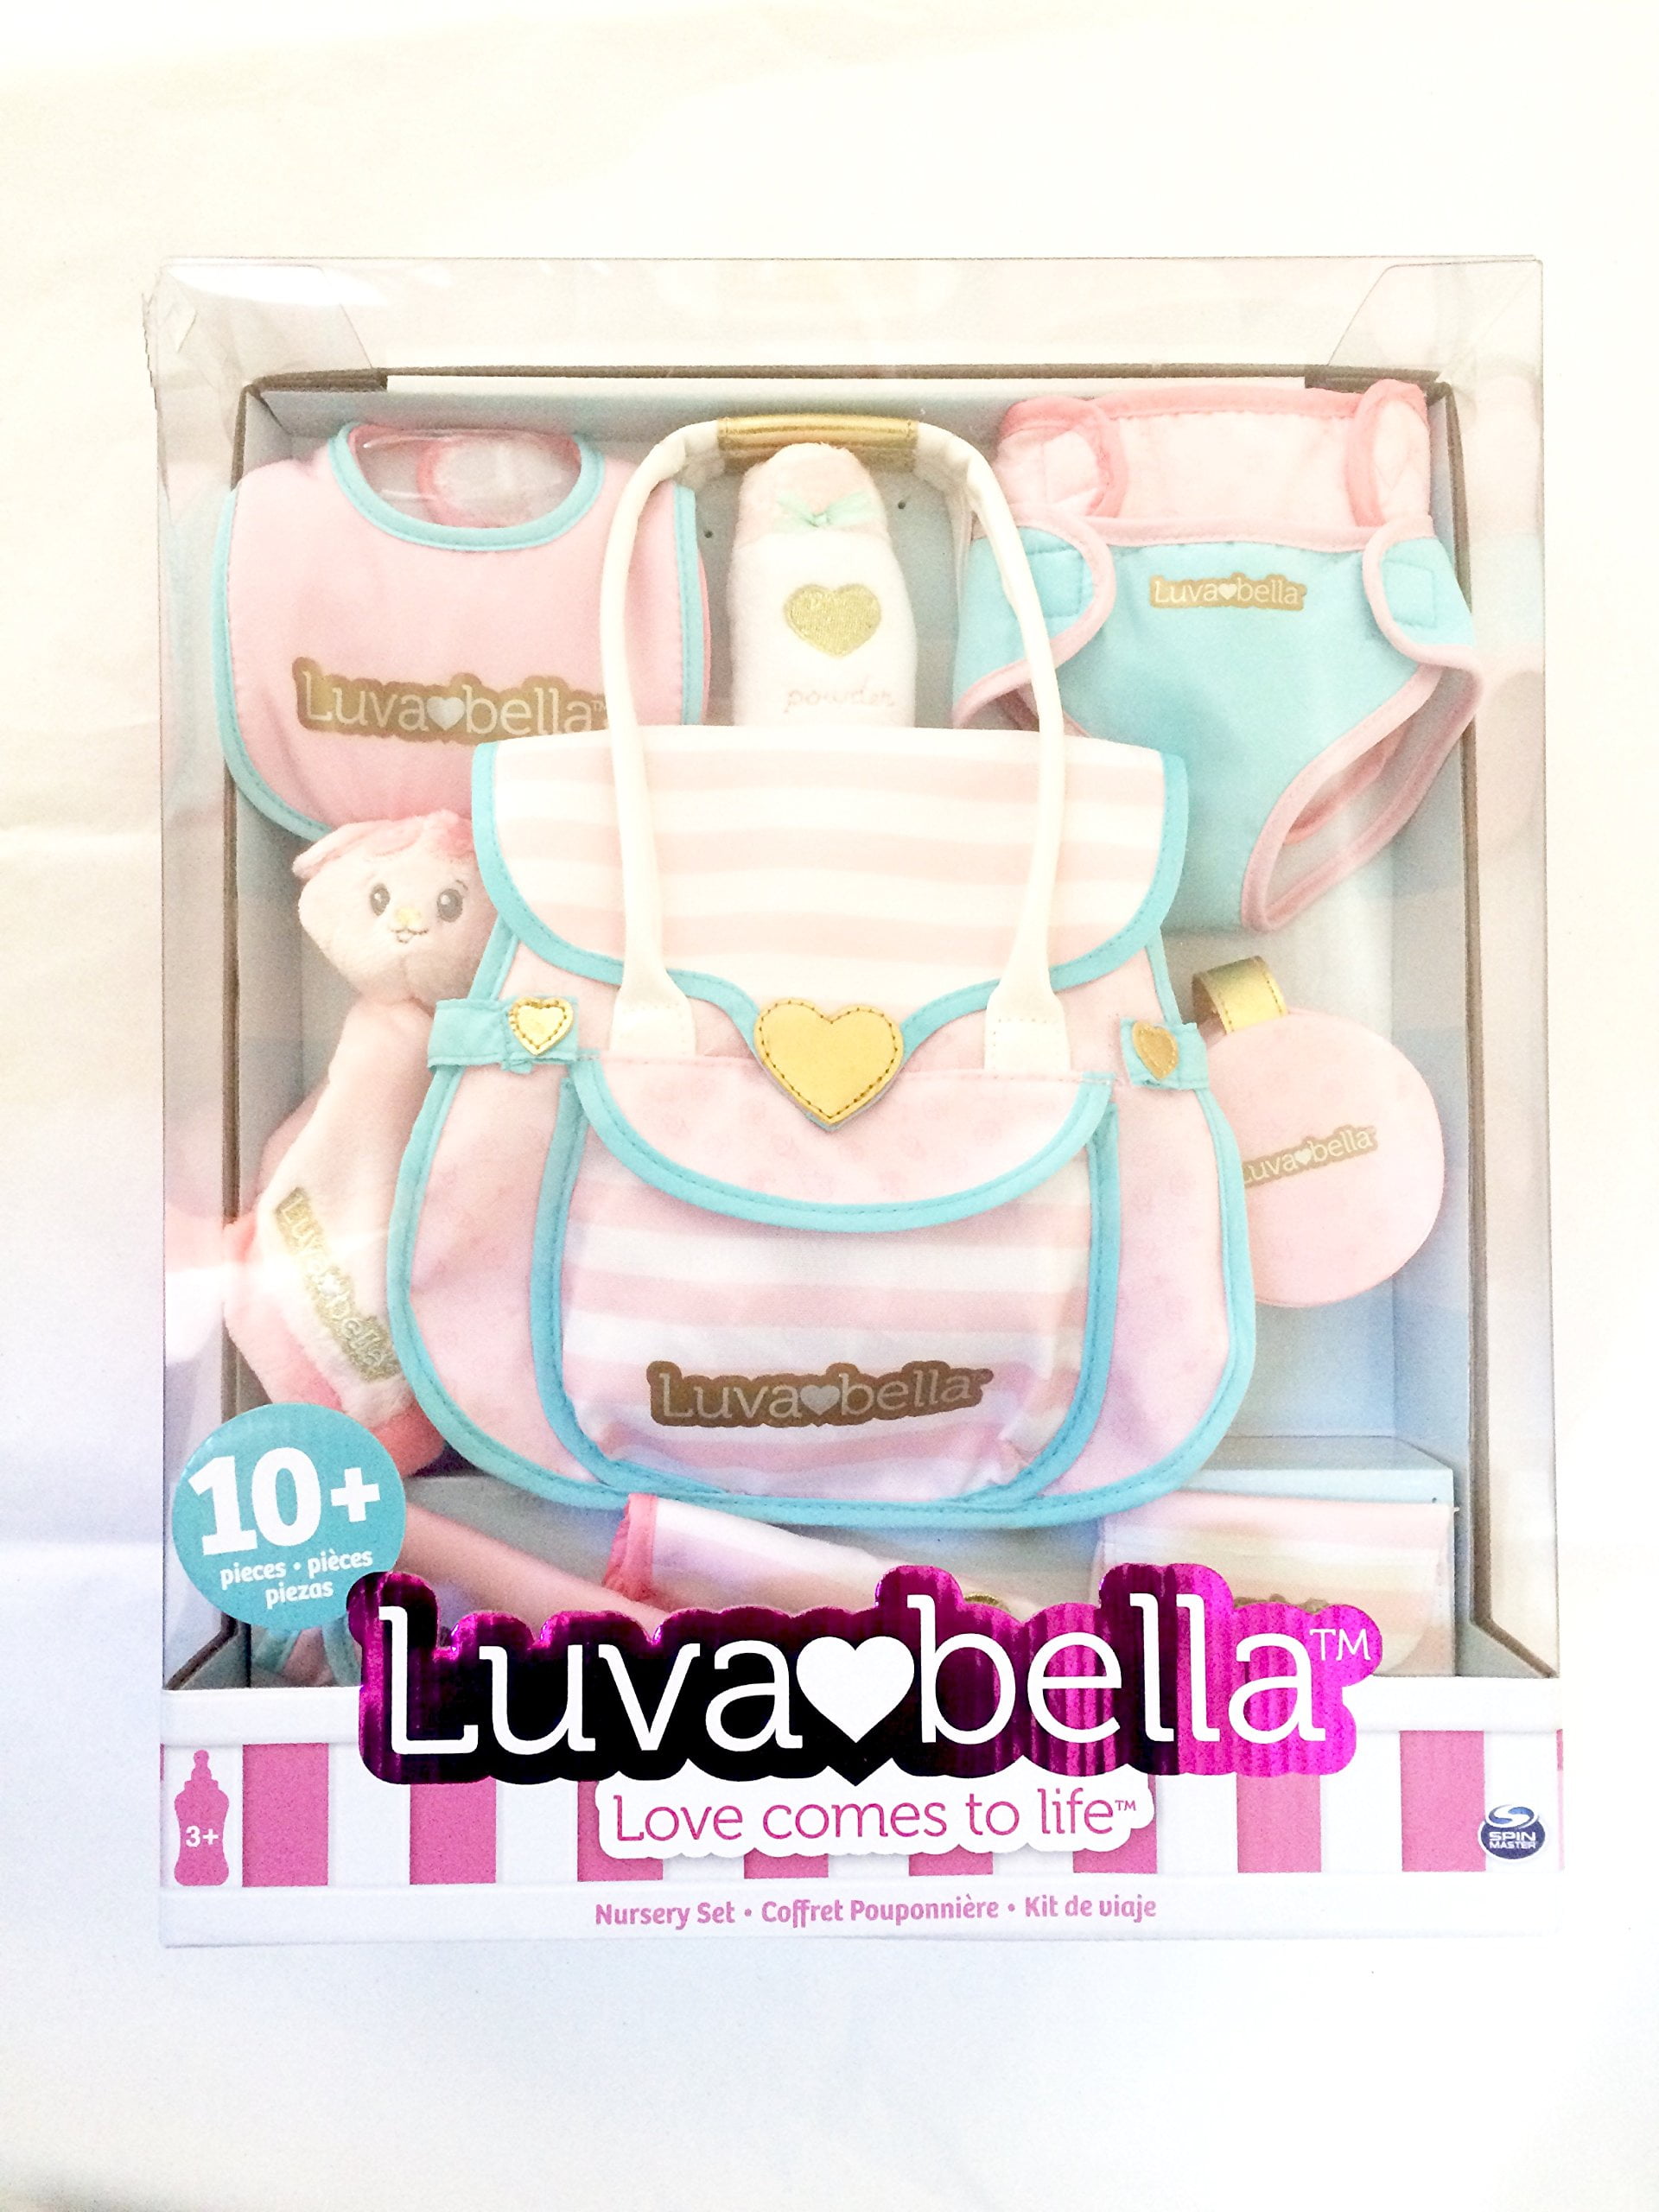 You \u0026 Me Luvabella Doll Diaper Bag Set 